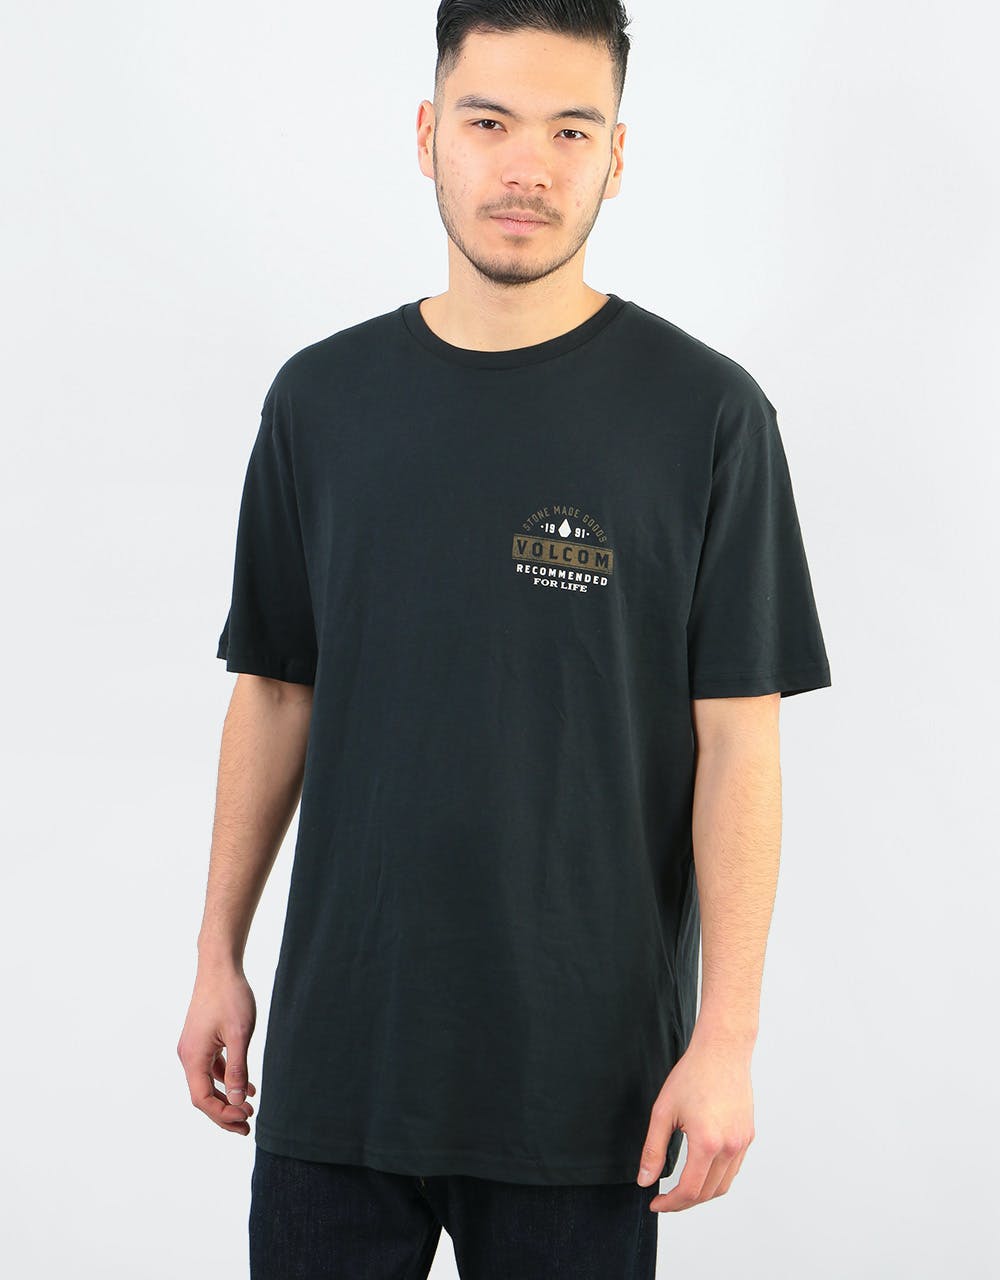 Volcom Barred T-Shirt - Black